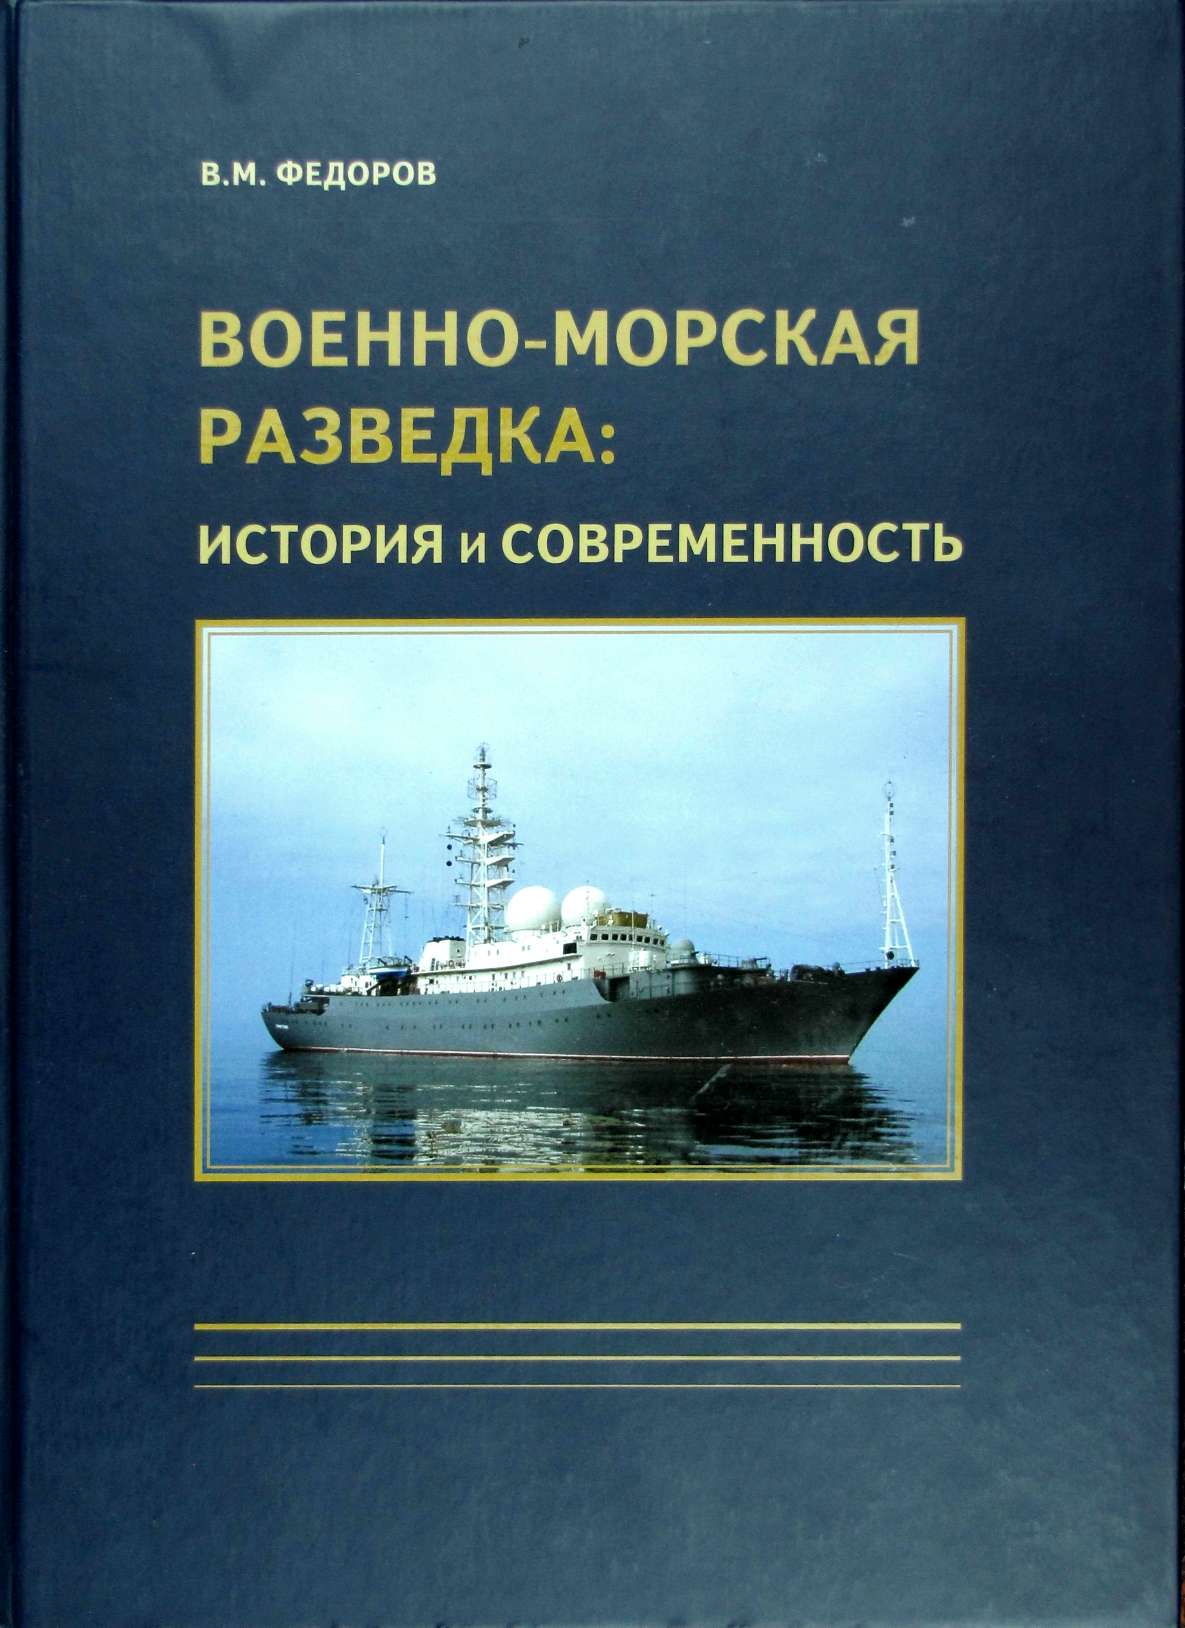 Pages from Федоров Военно-морская разведка.jpg